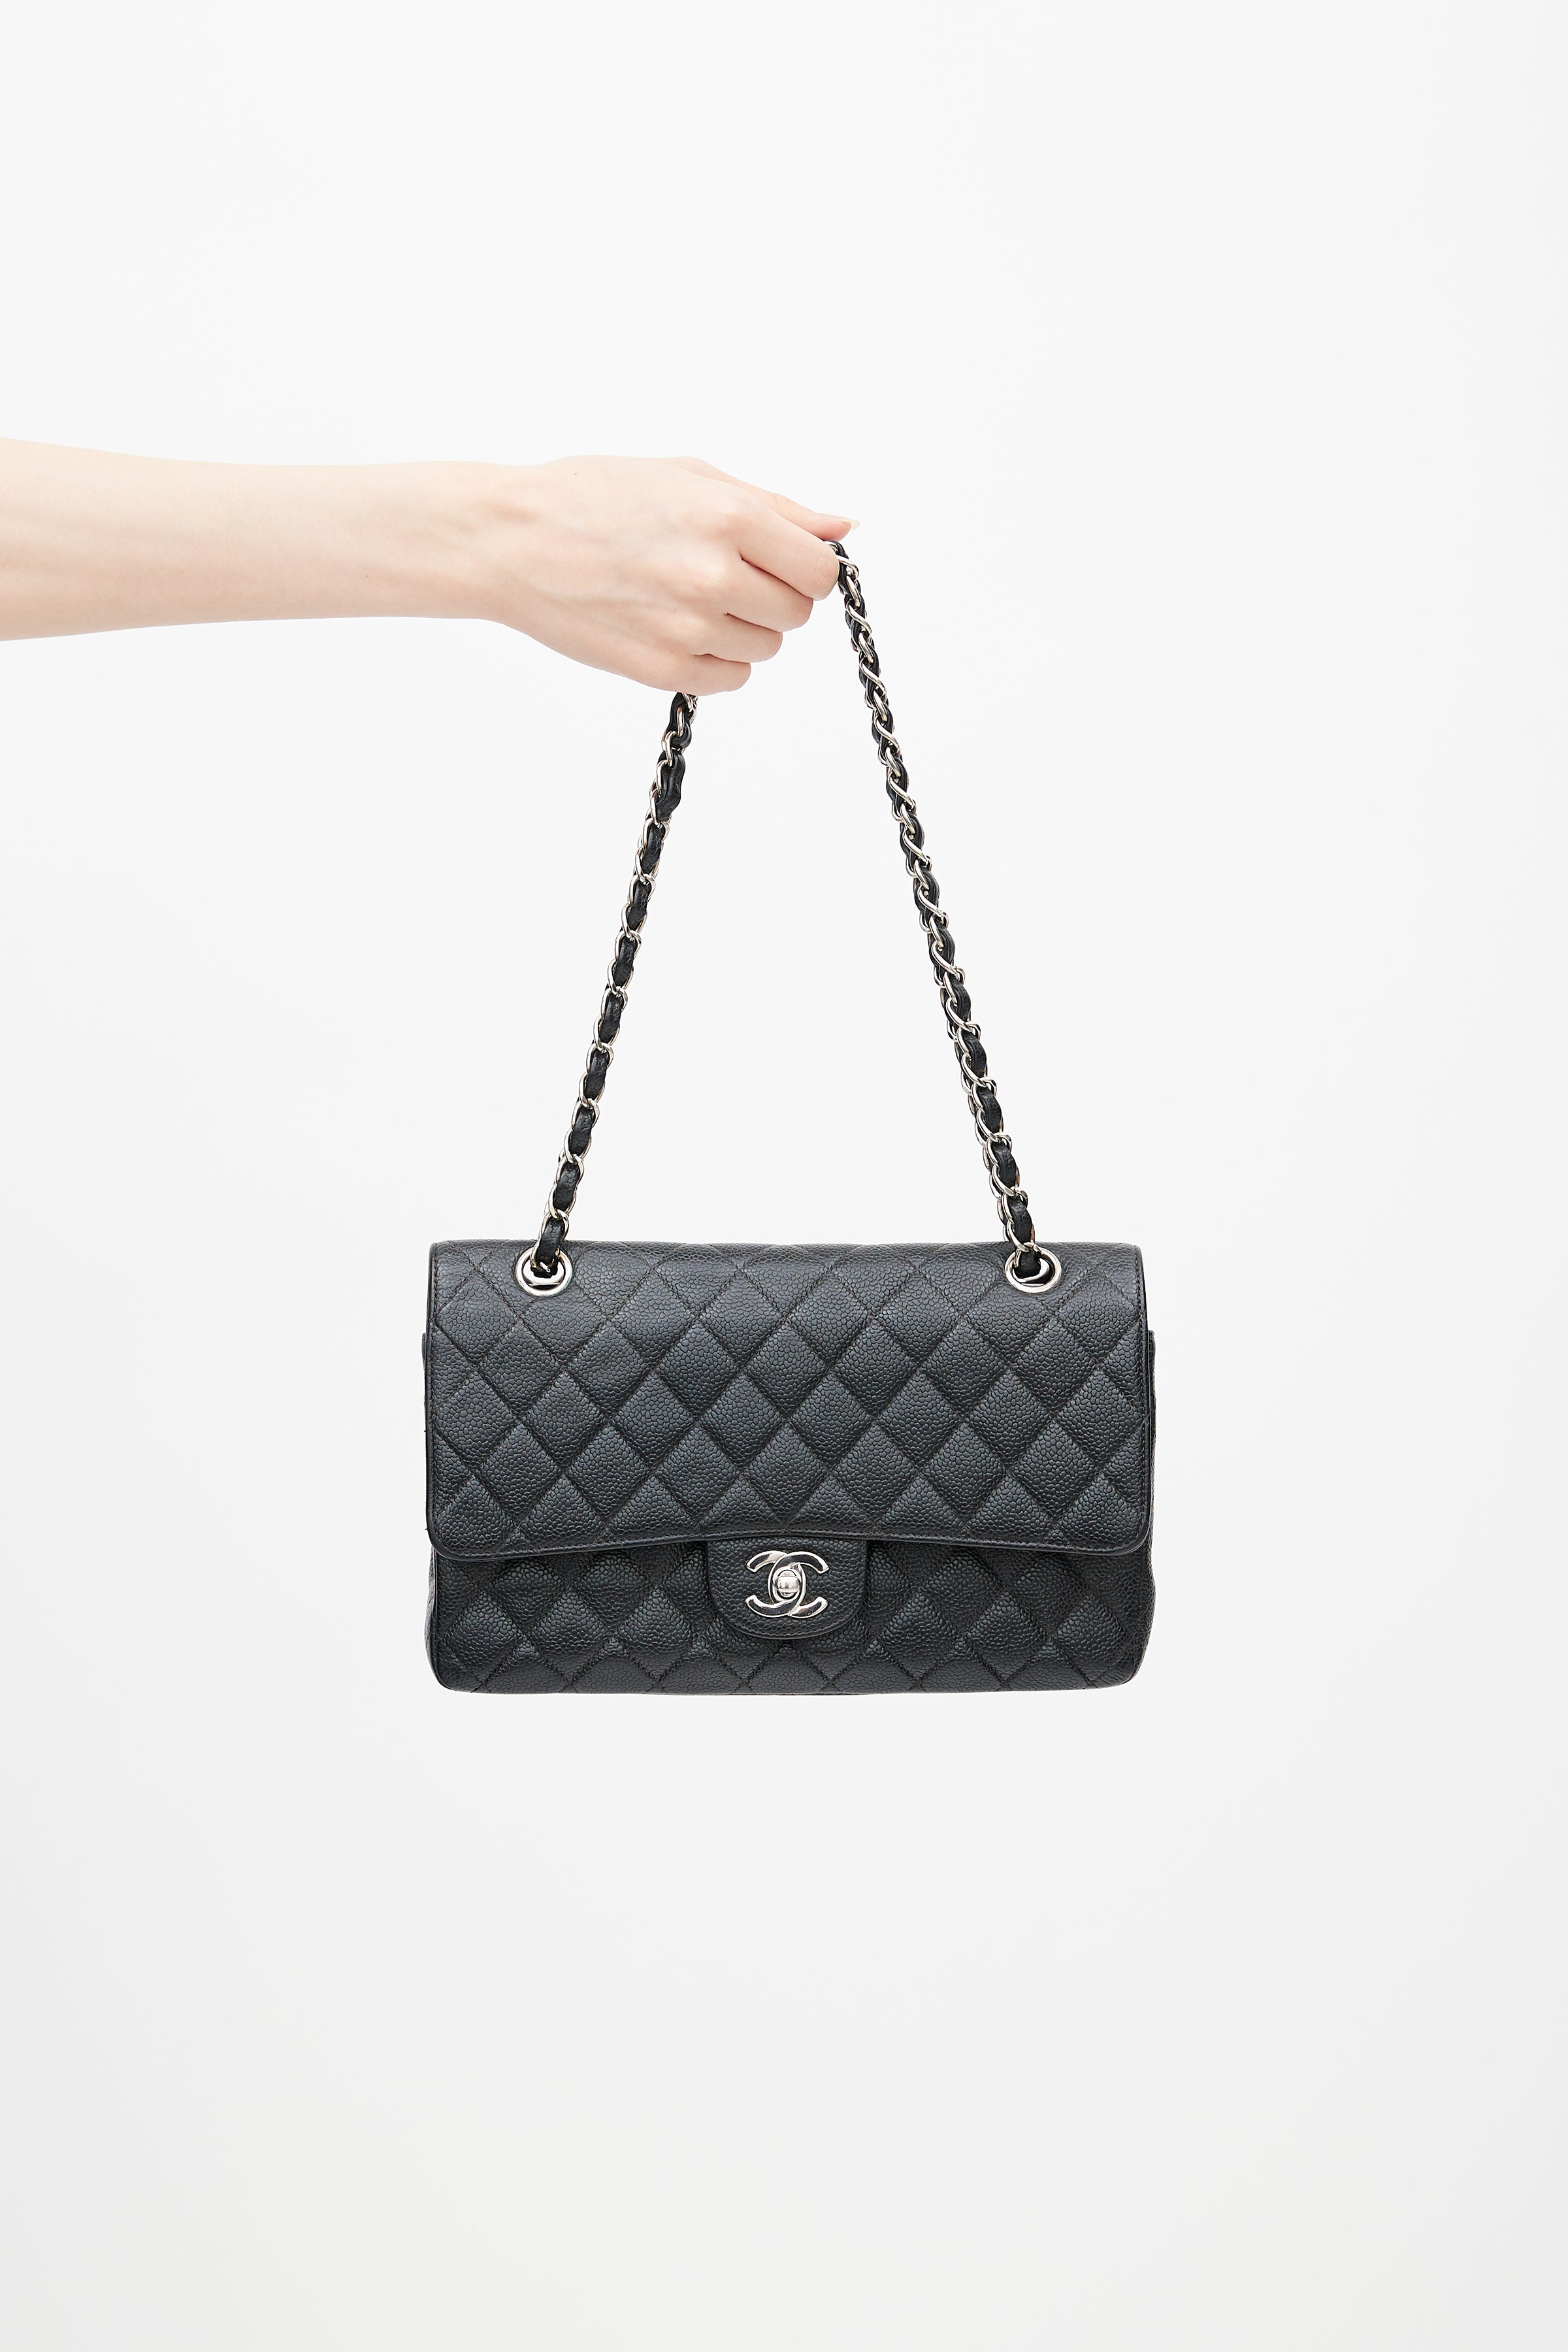 Chanel // Black Caviar Medium Double Flap Shoulder Bag – VSP